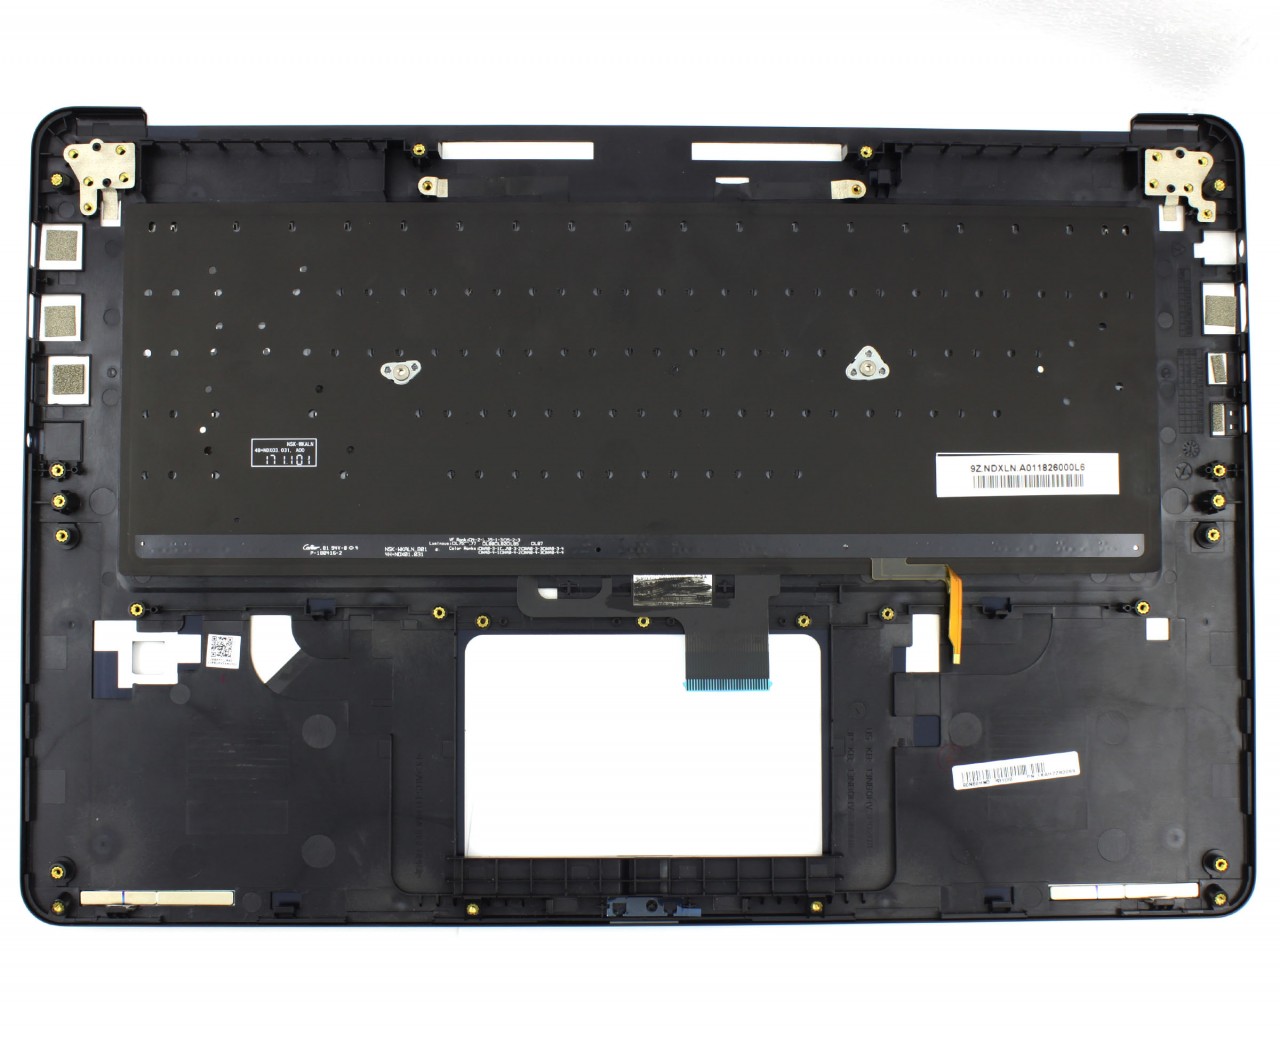 Tastatura Asus Zenbook Pro UX550GD Neagra cu Palmrest Albastru Inchis iluminata backlit image10